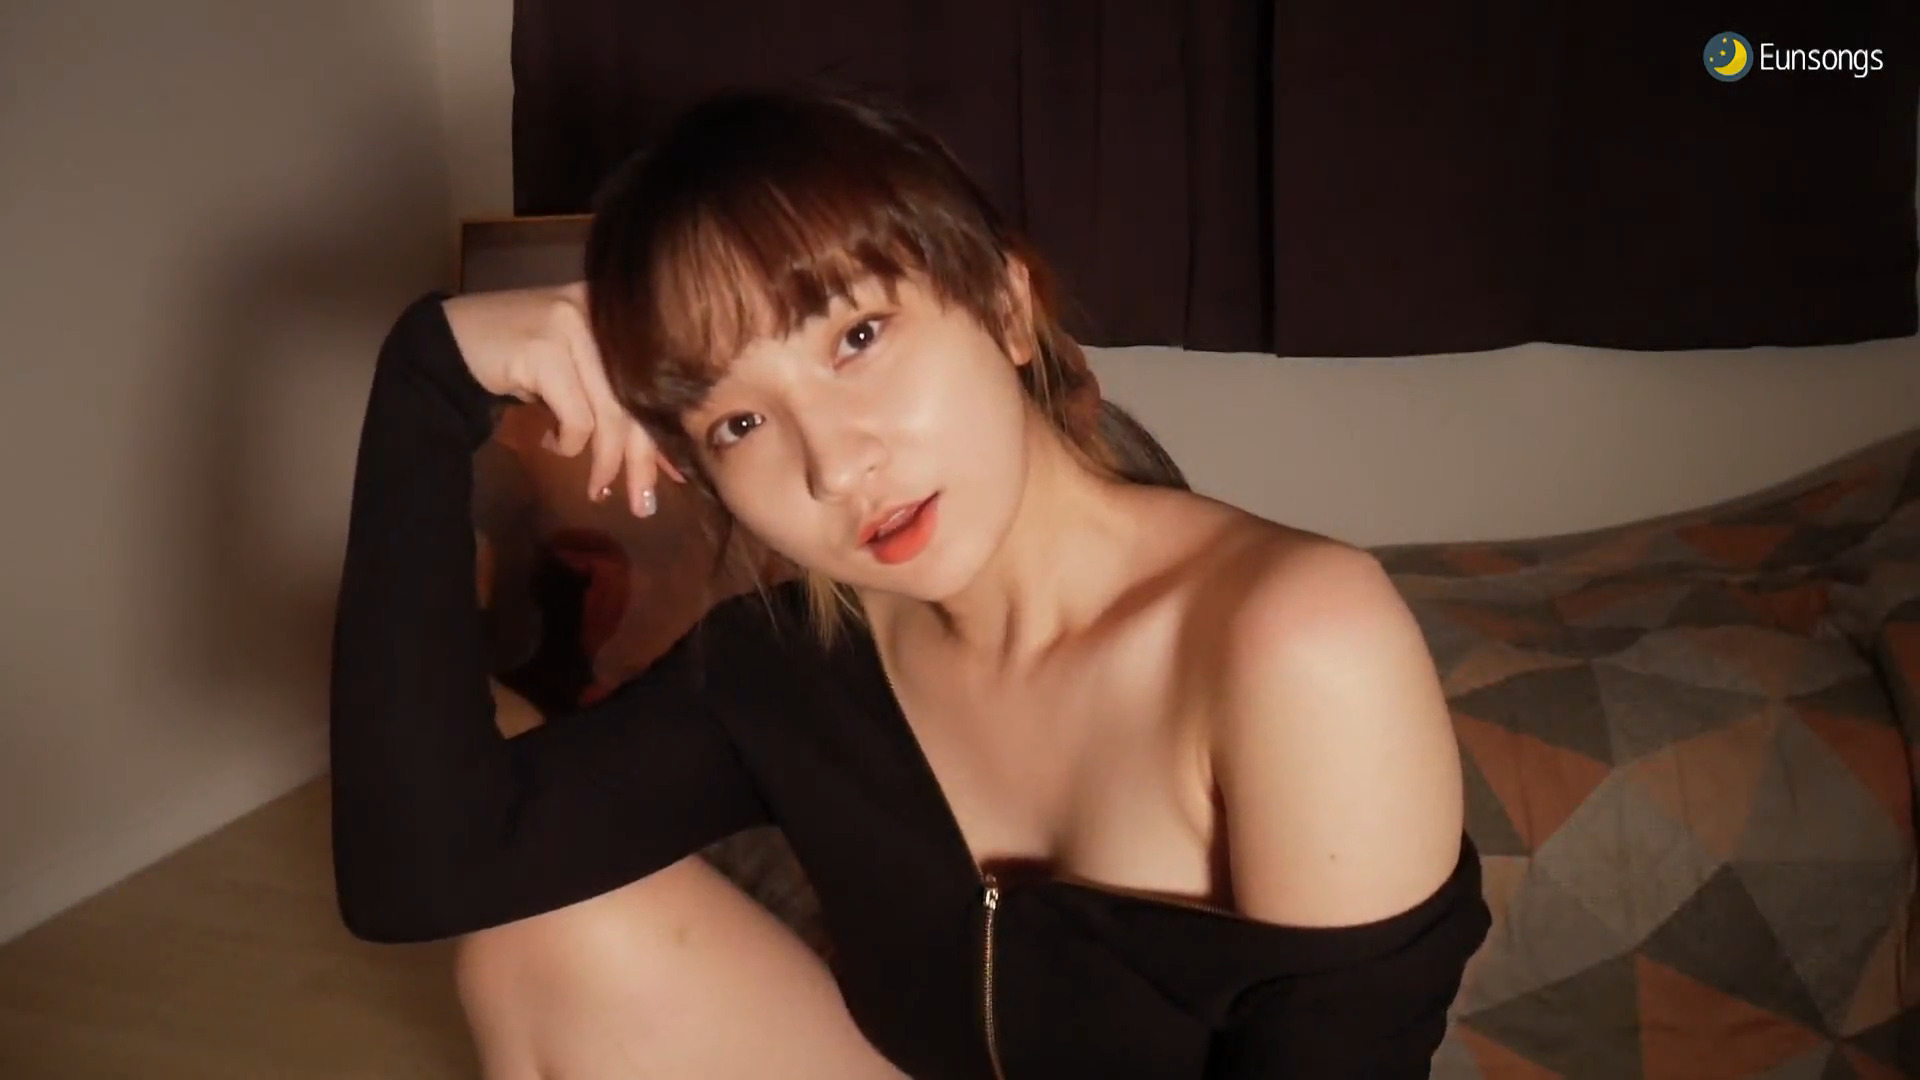 Eunsongs Asmr Last Date Night Patreon Video Leaked